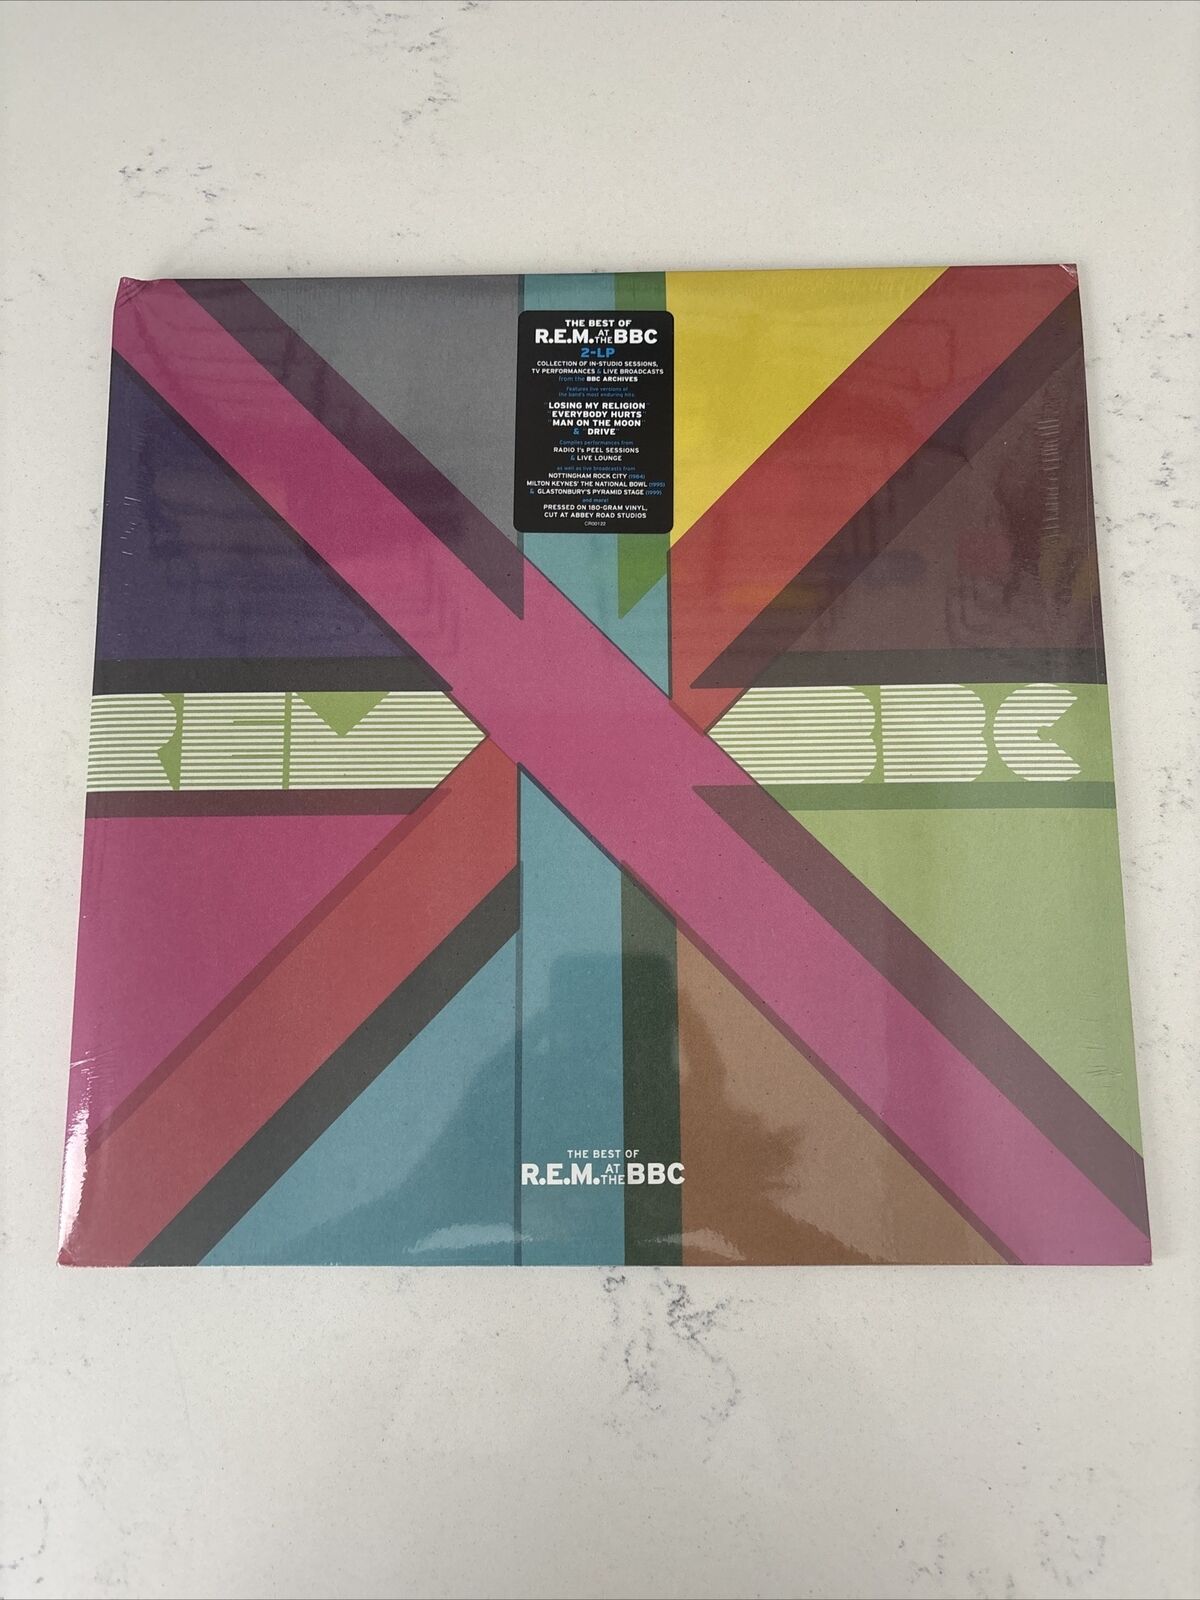 R.E.M. - Best Of R.E.M. At The BBC [New Vinyl 2LP]Gatefold LP Jacket Record 180G